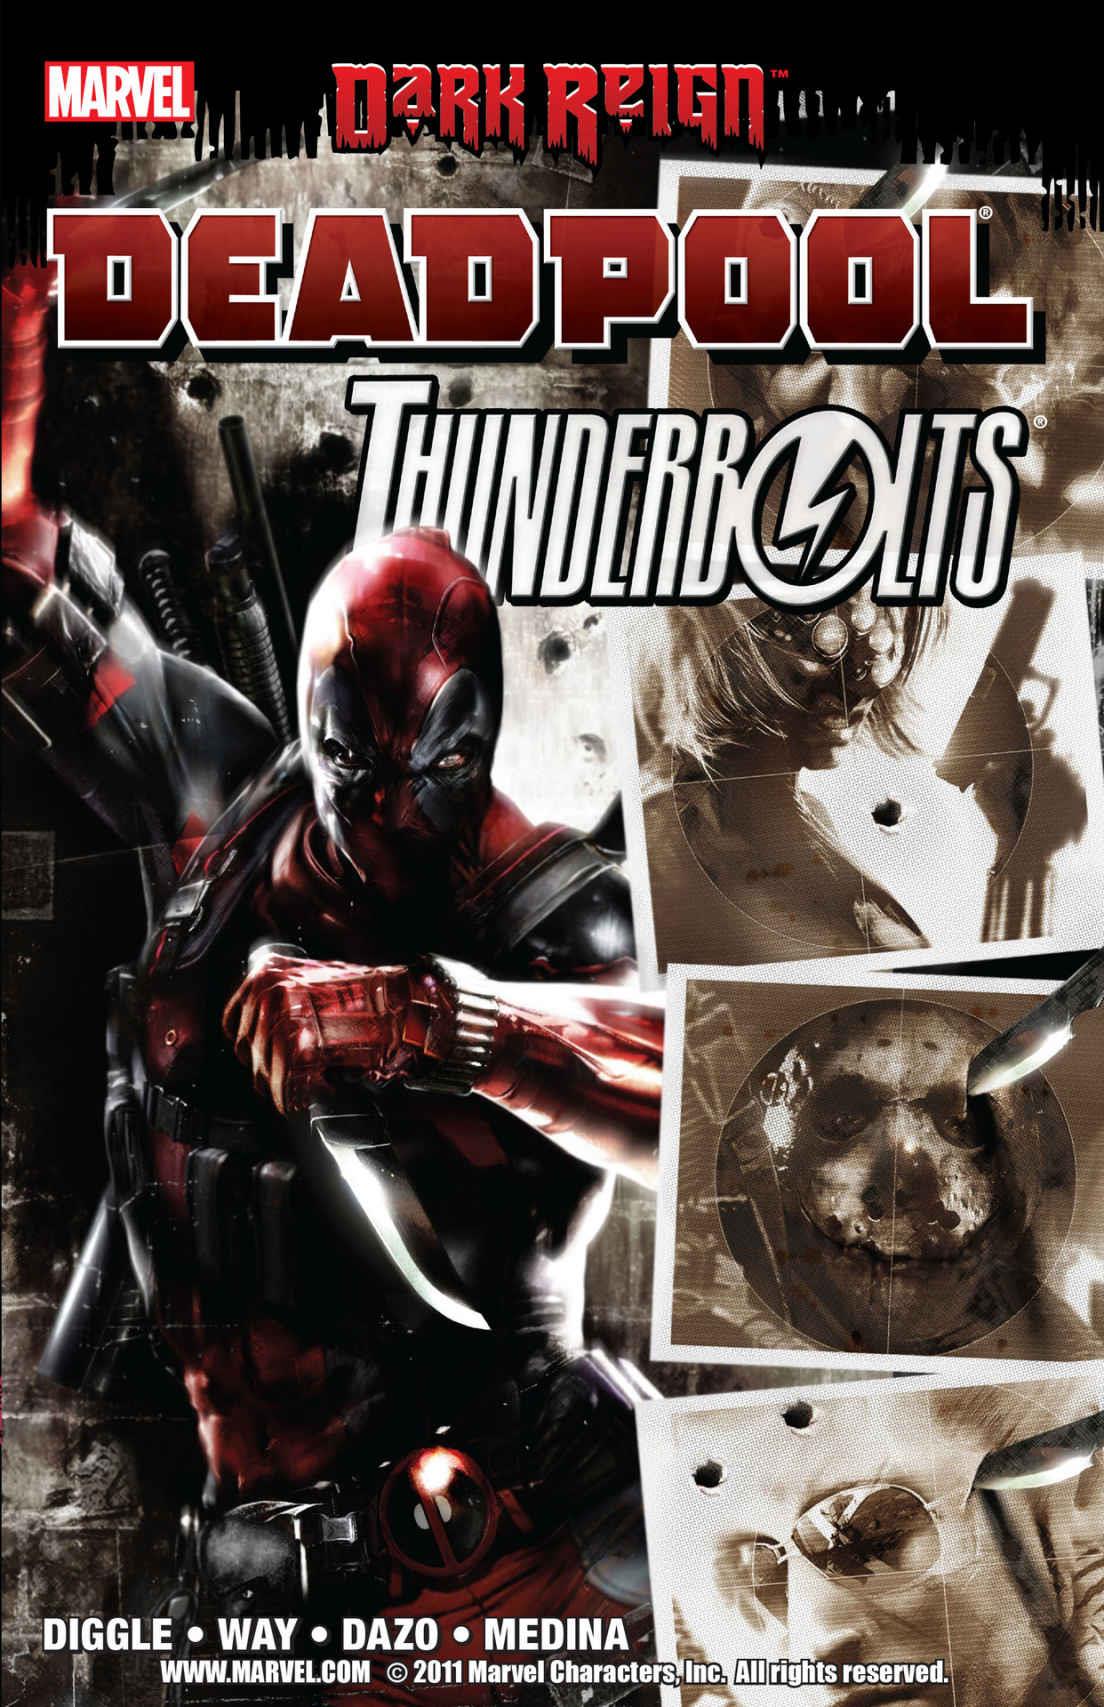 Bronze　Reign　Deadpool/thunderbolts　Age　Graphic　Dark　Bat　Cave　Buy　Novel